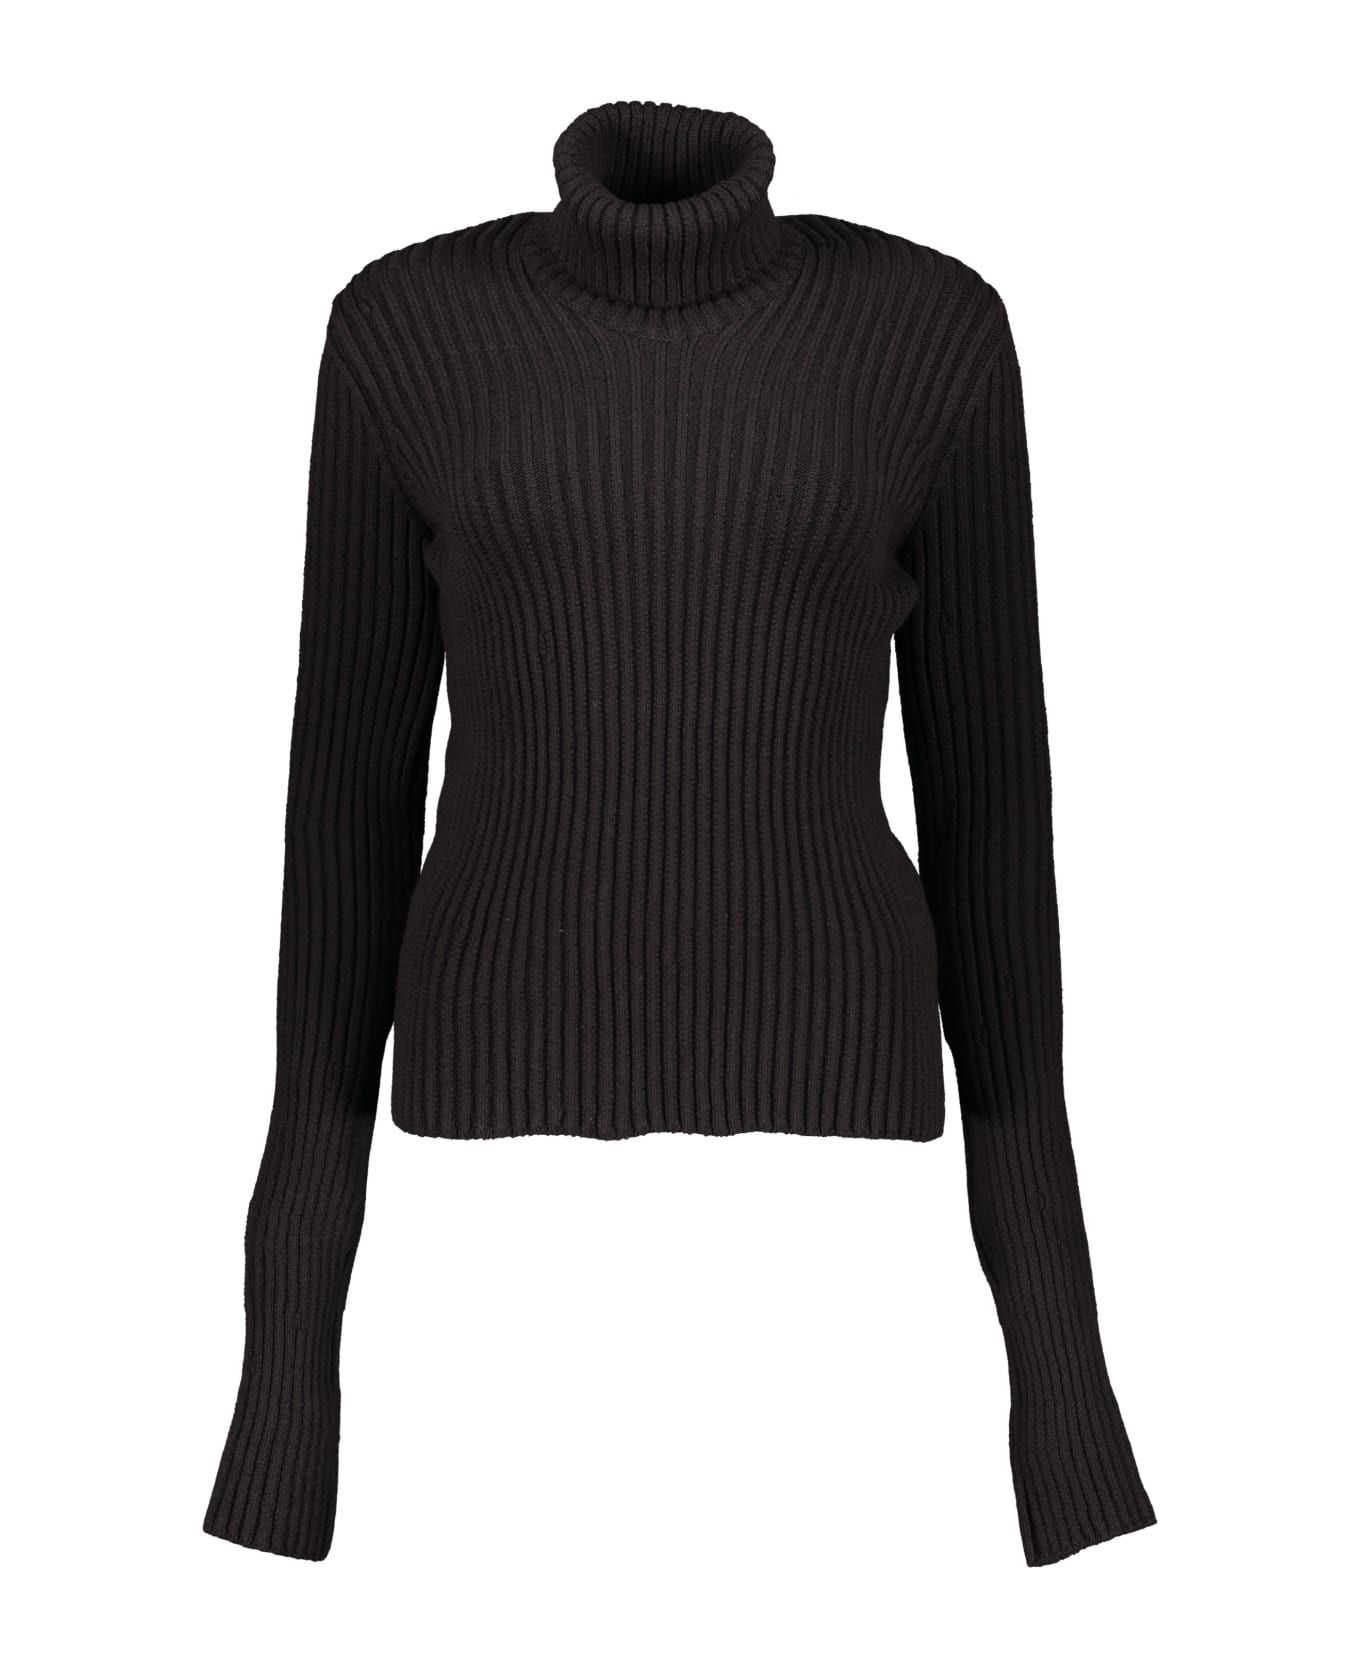 Bottega Veneta Wool Turtleneck Sweater - black